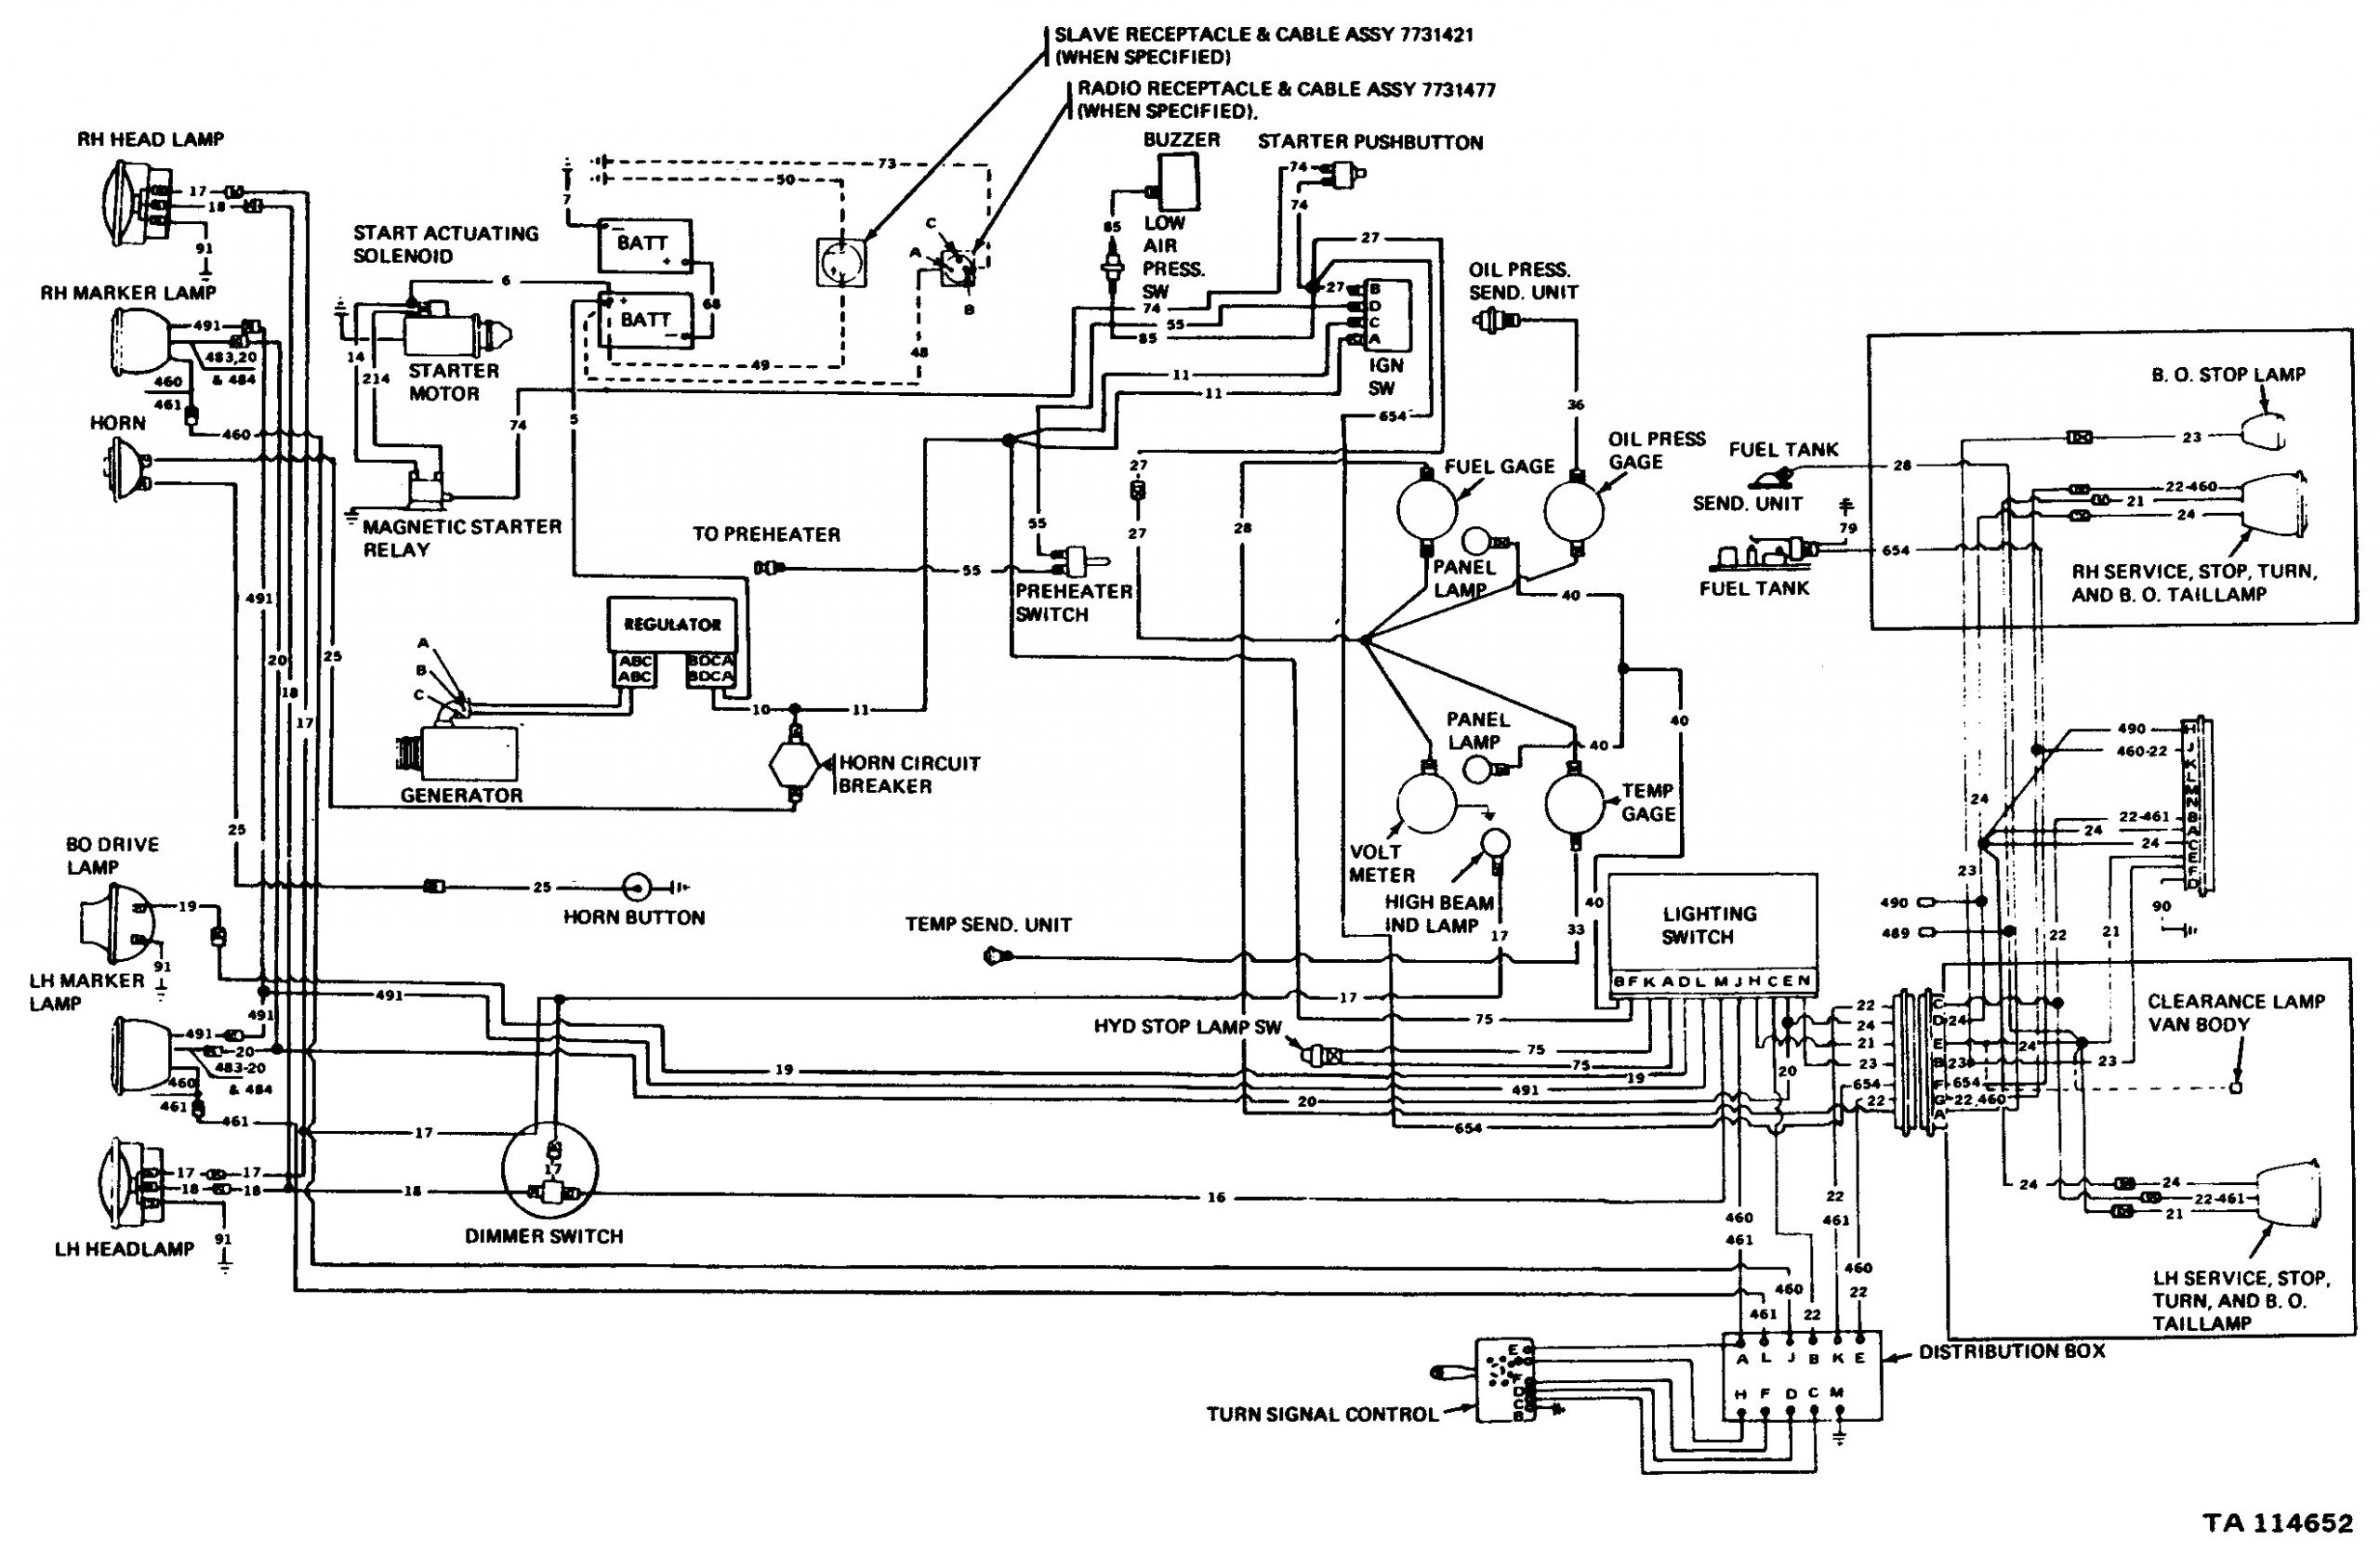 mack truck fuel system diagram sterling truck wiring diagrams of mack truck fuel system diagram gif